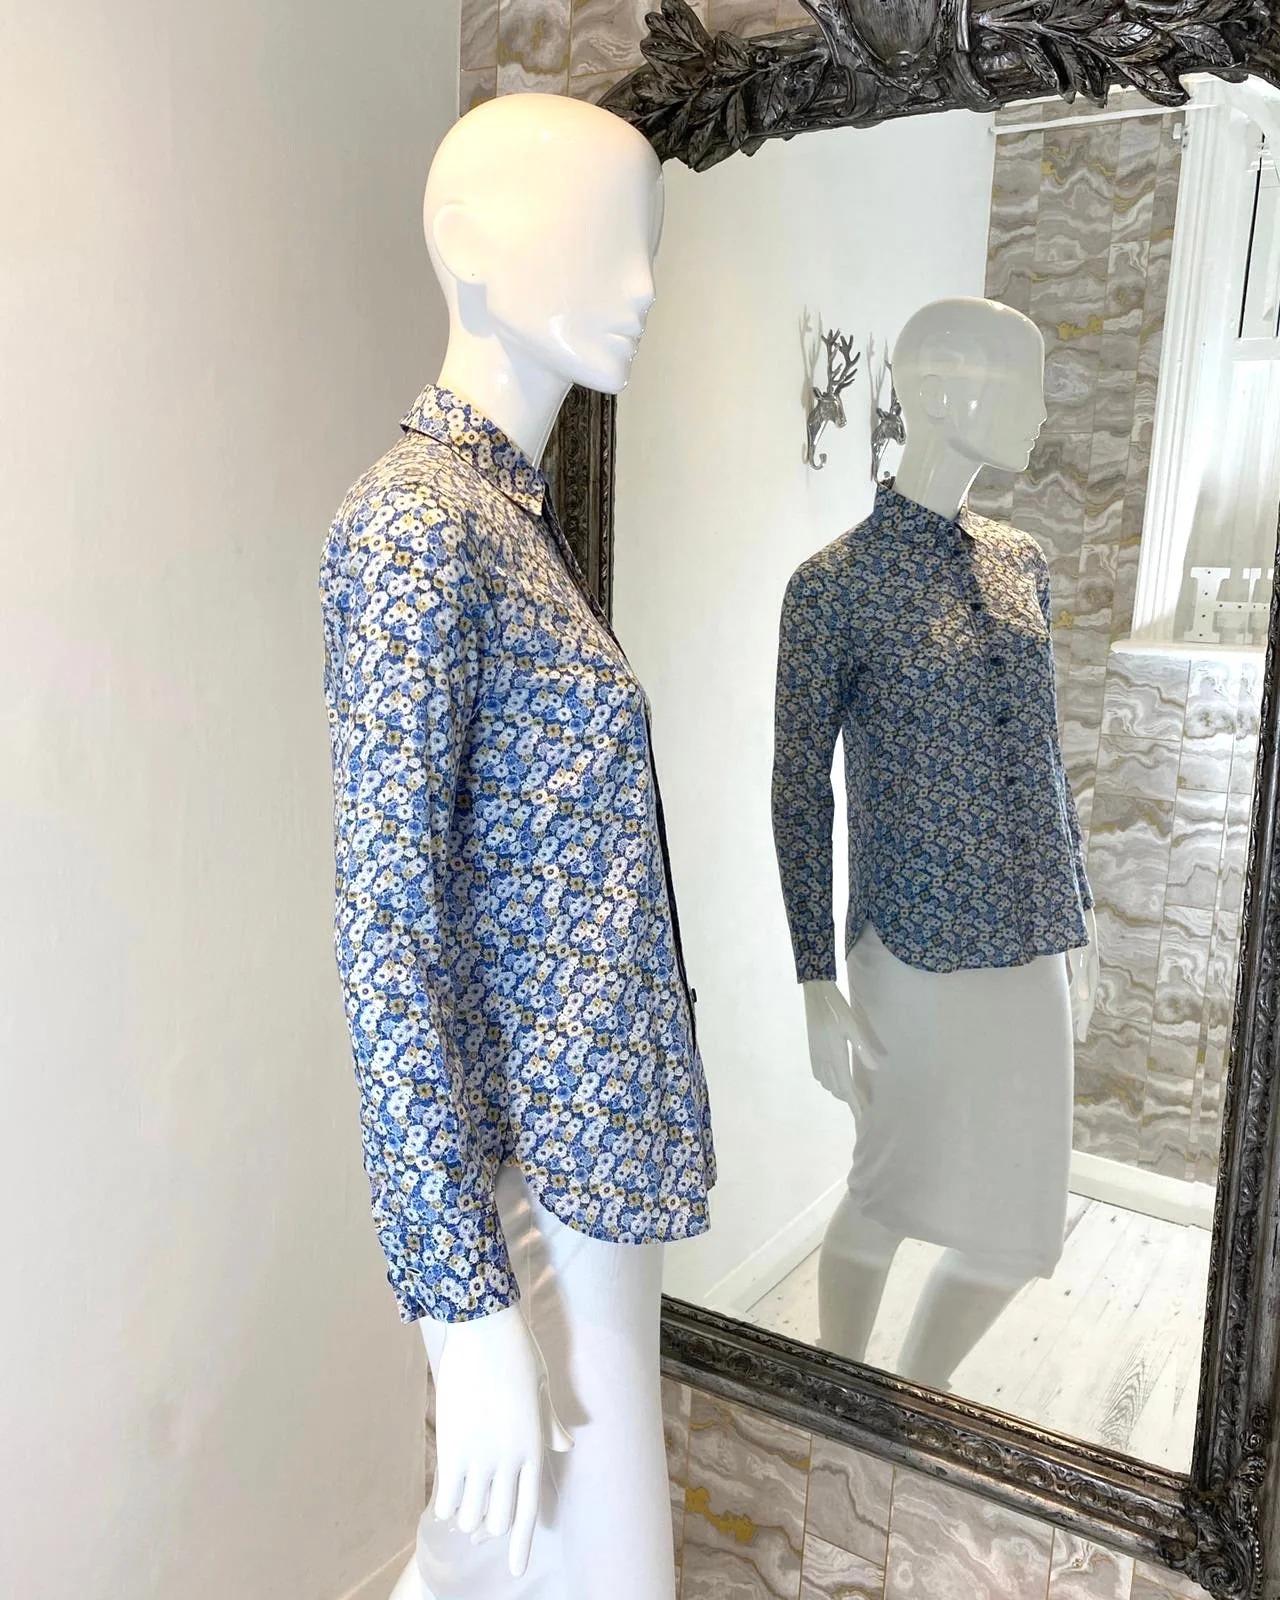 Saint Laurent Floral Cotton Shirt In Excellent Condition For Sale In London, GB